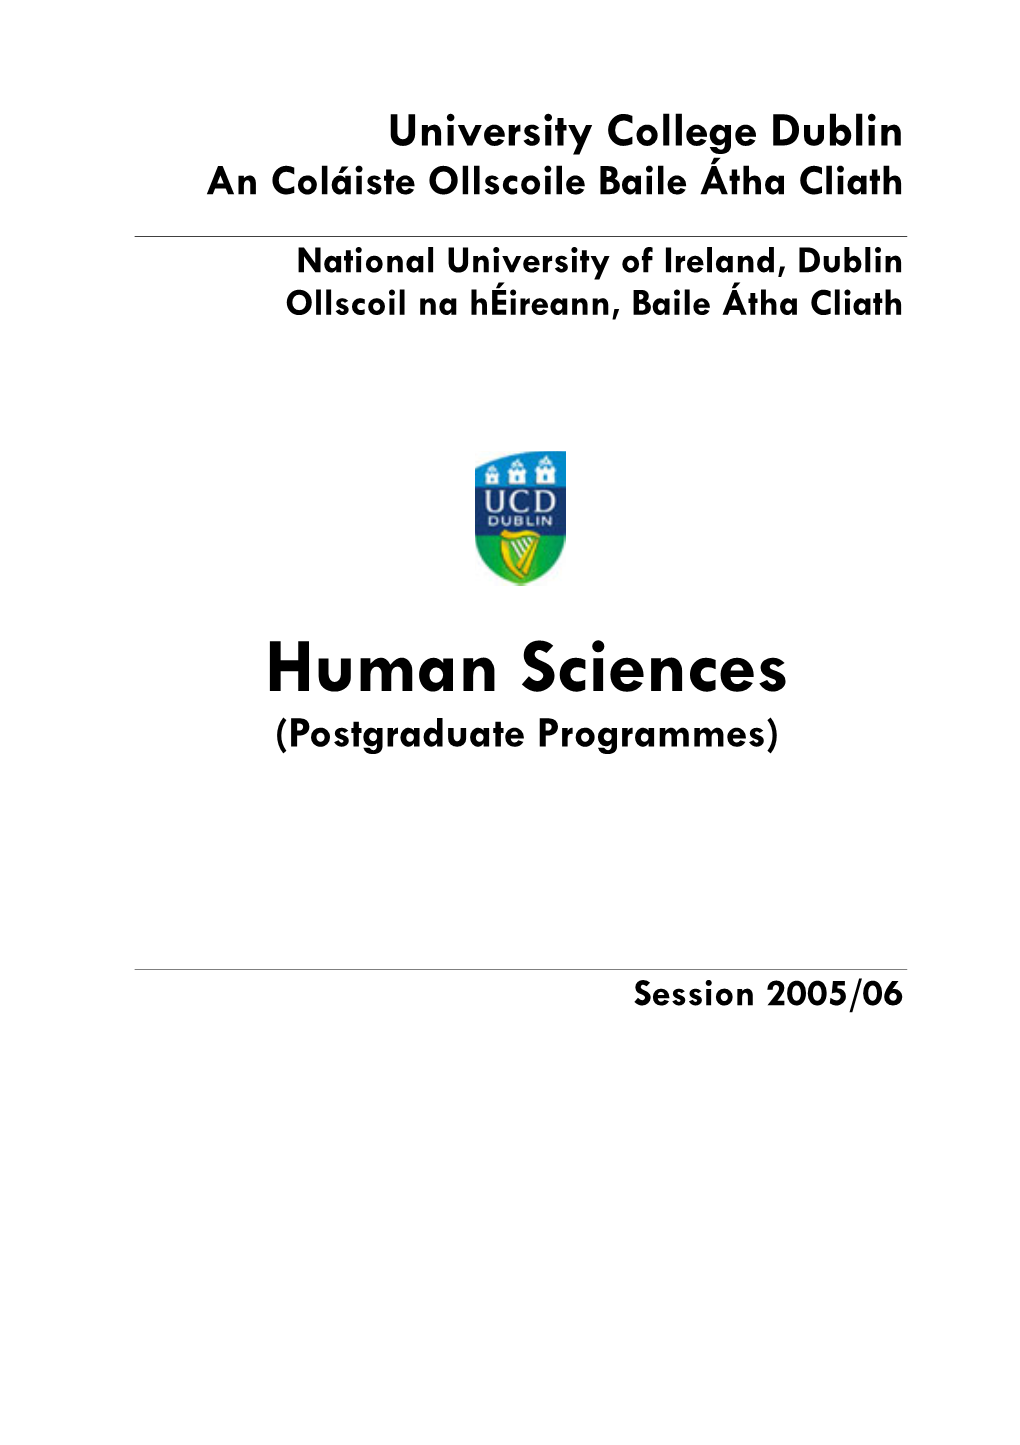 Human Sciences Postgraduate